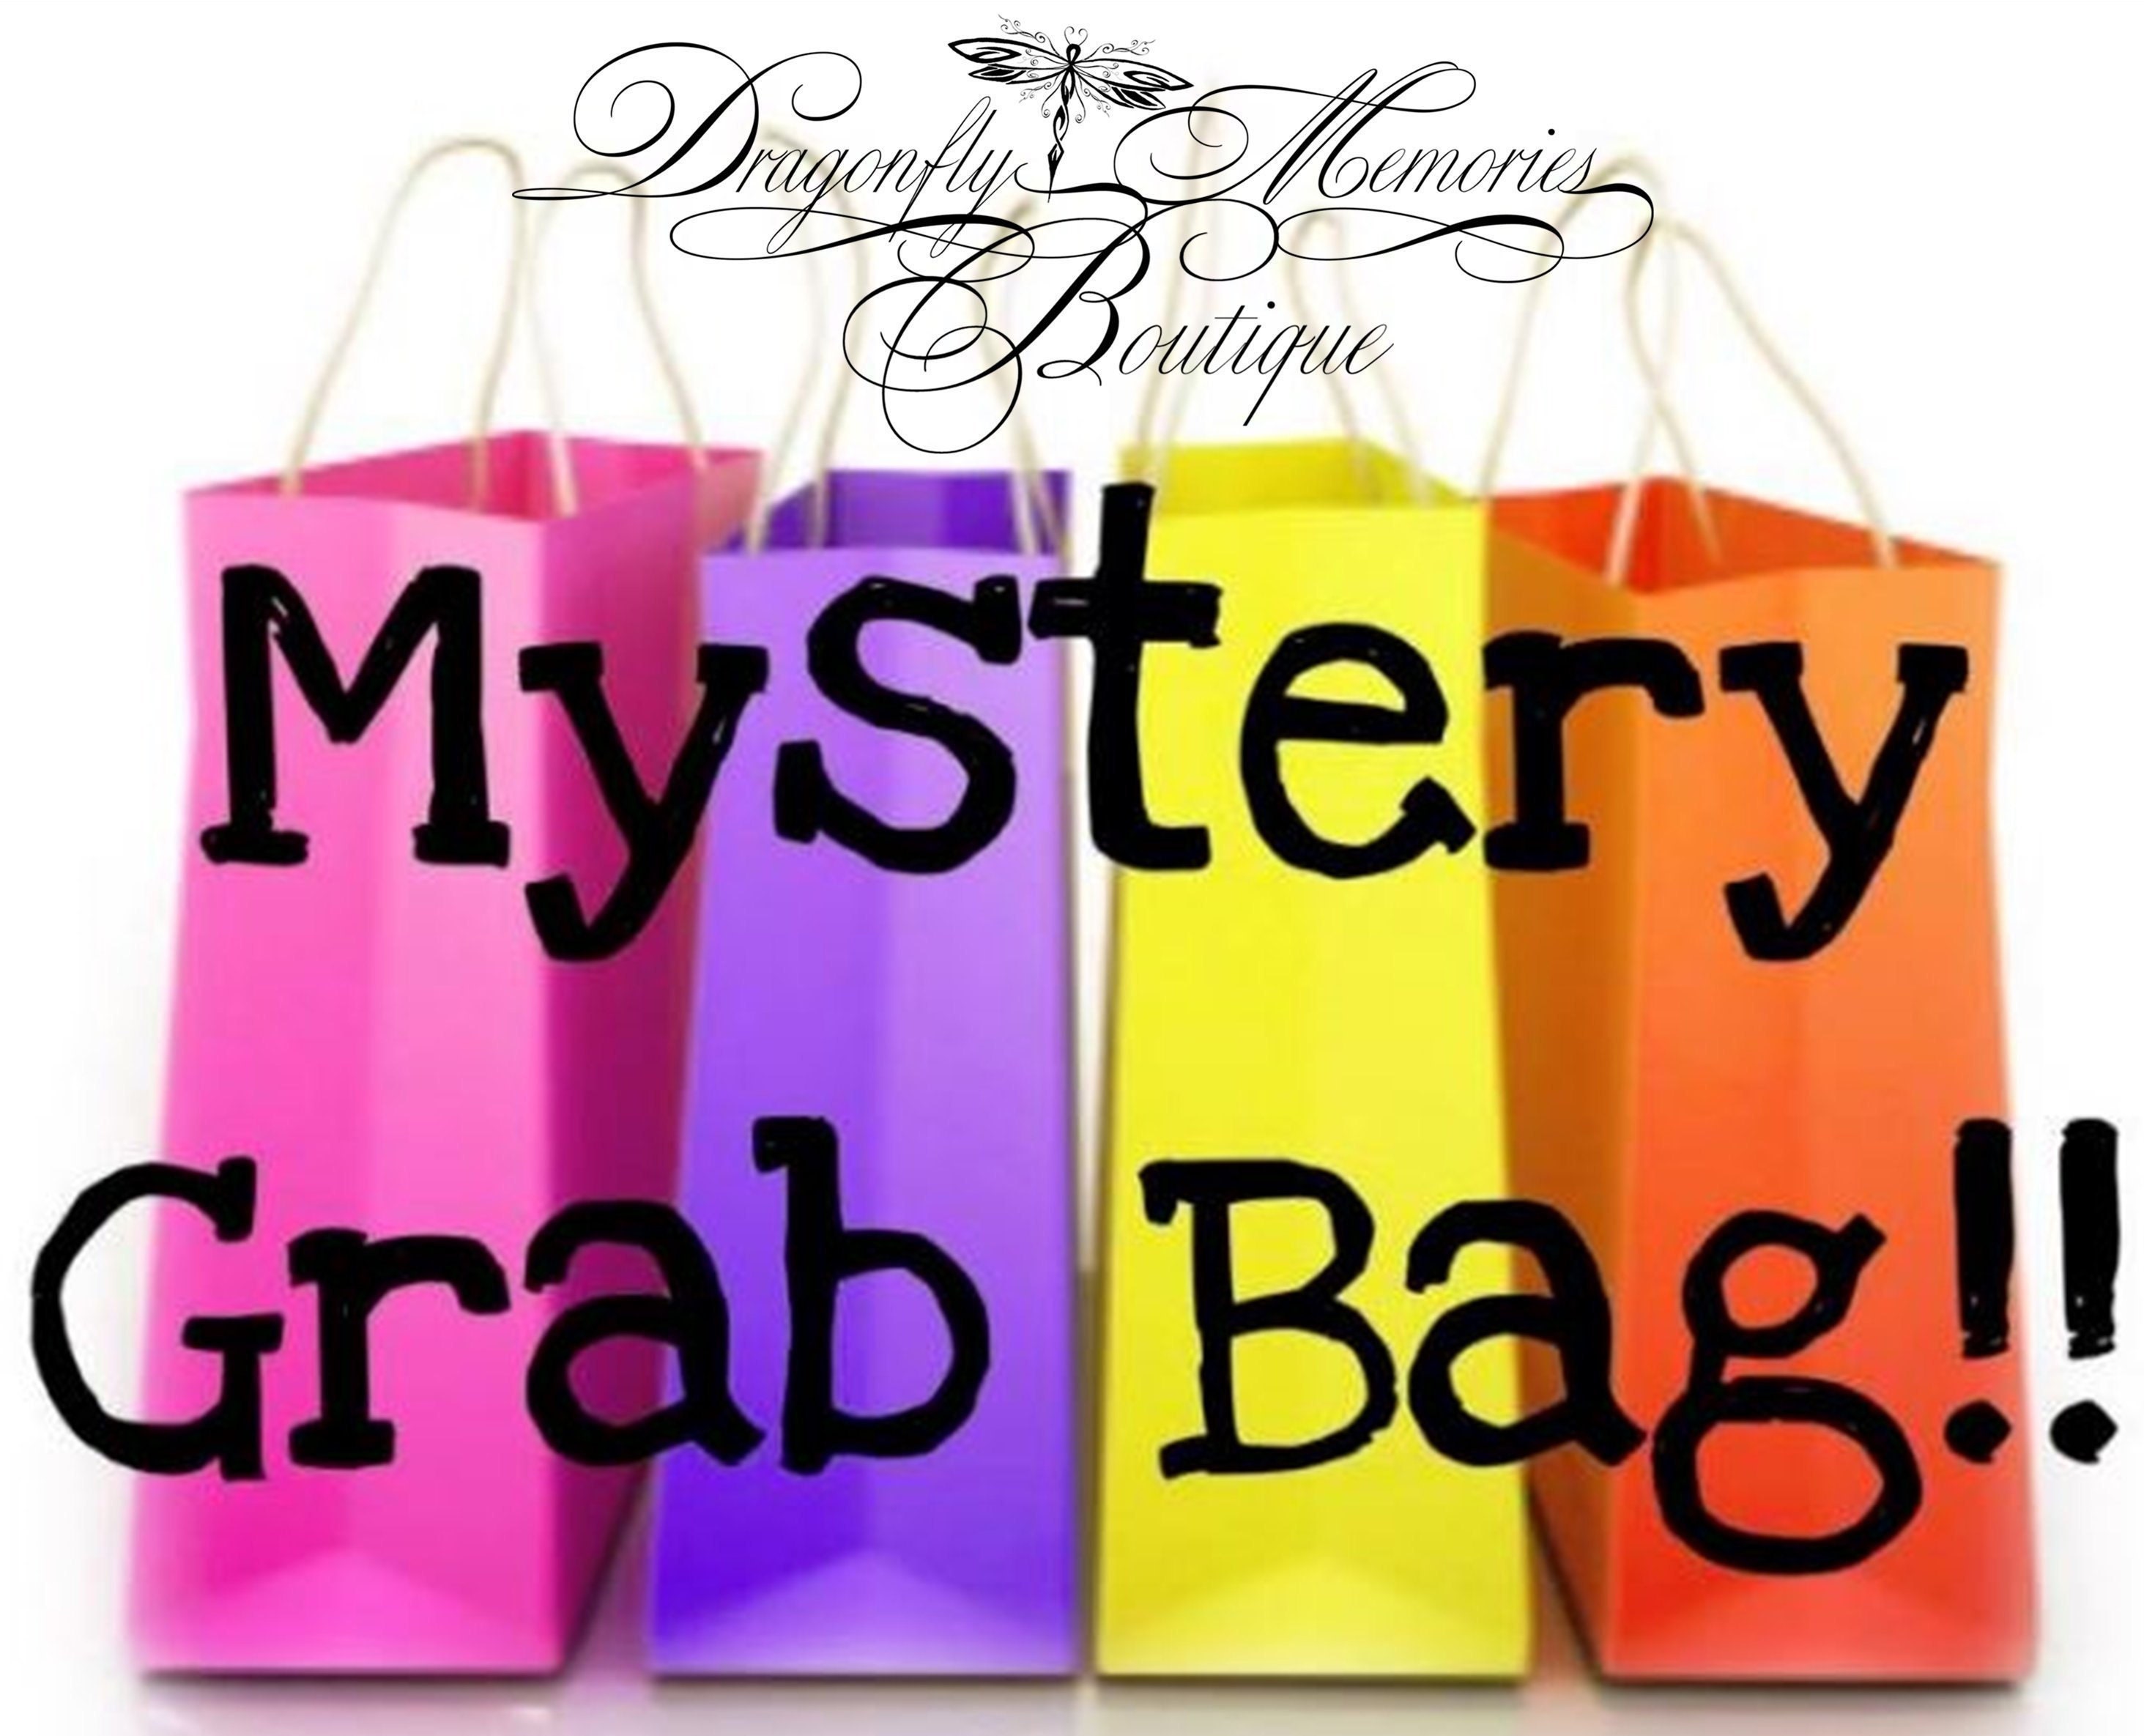 Art Supply Mystery Bag, Lucky Dip, Mystery Bag, Grab Bag, Art Supplies  Surprise 